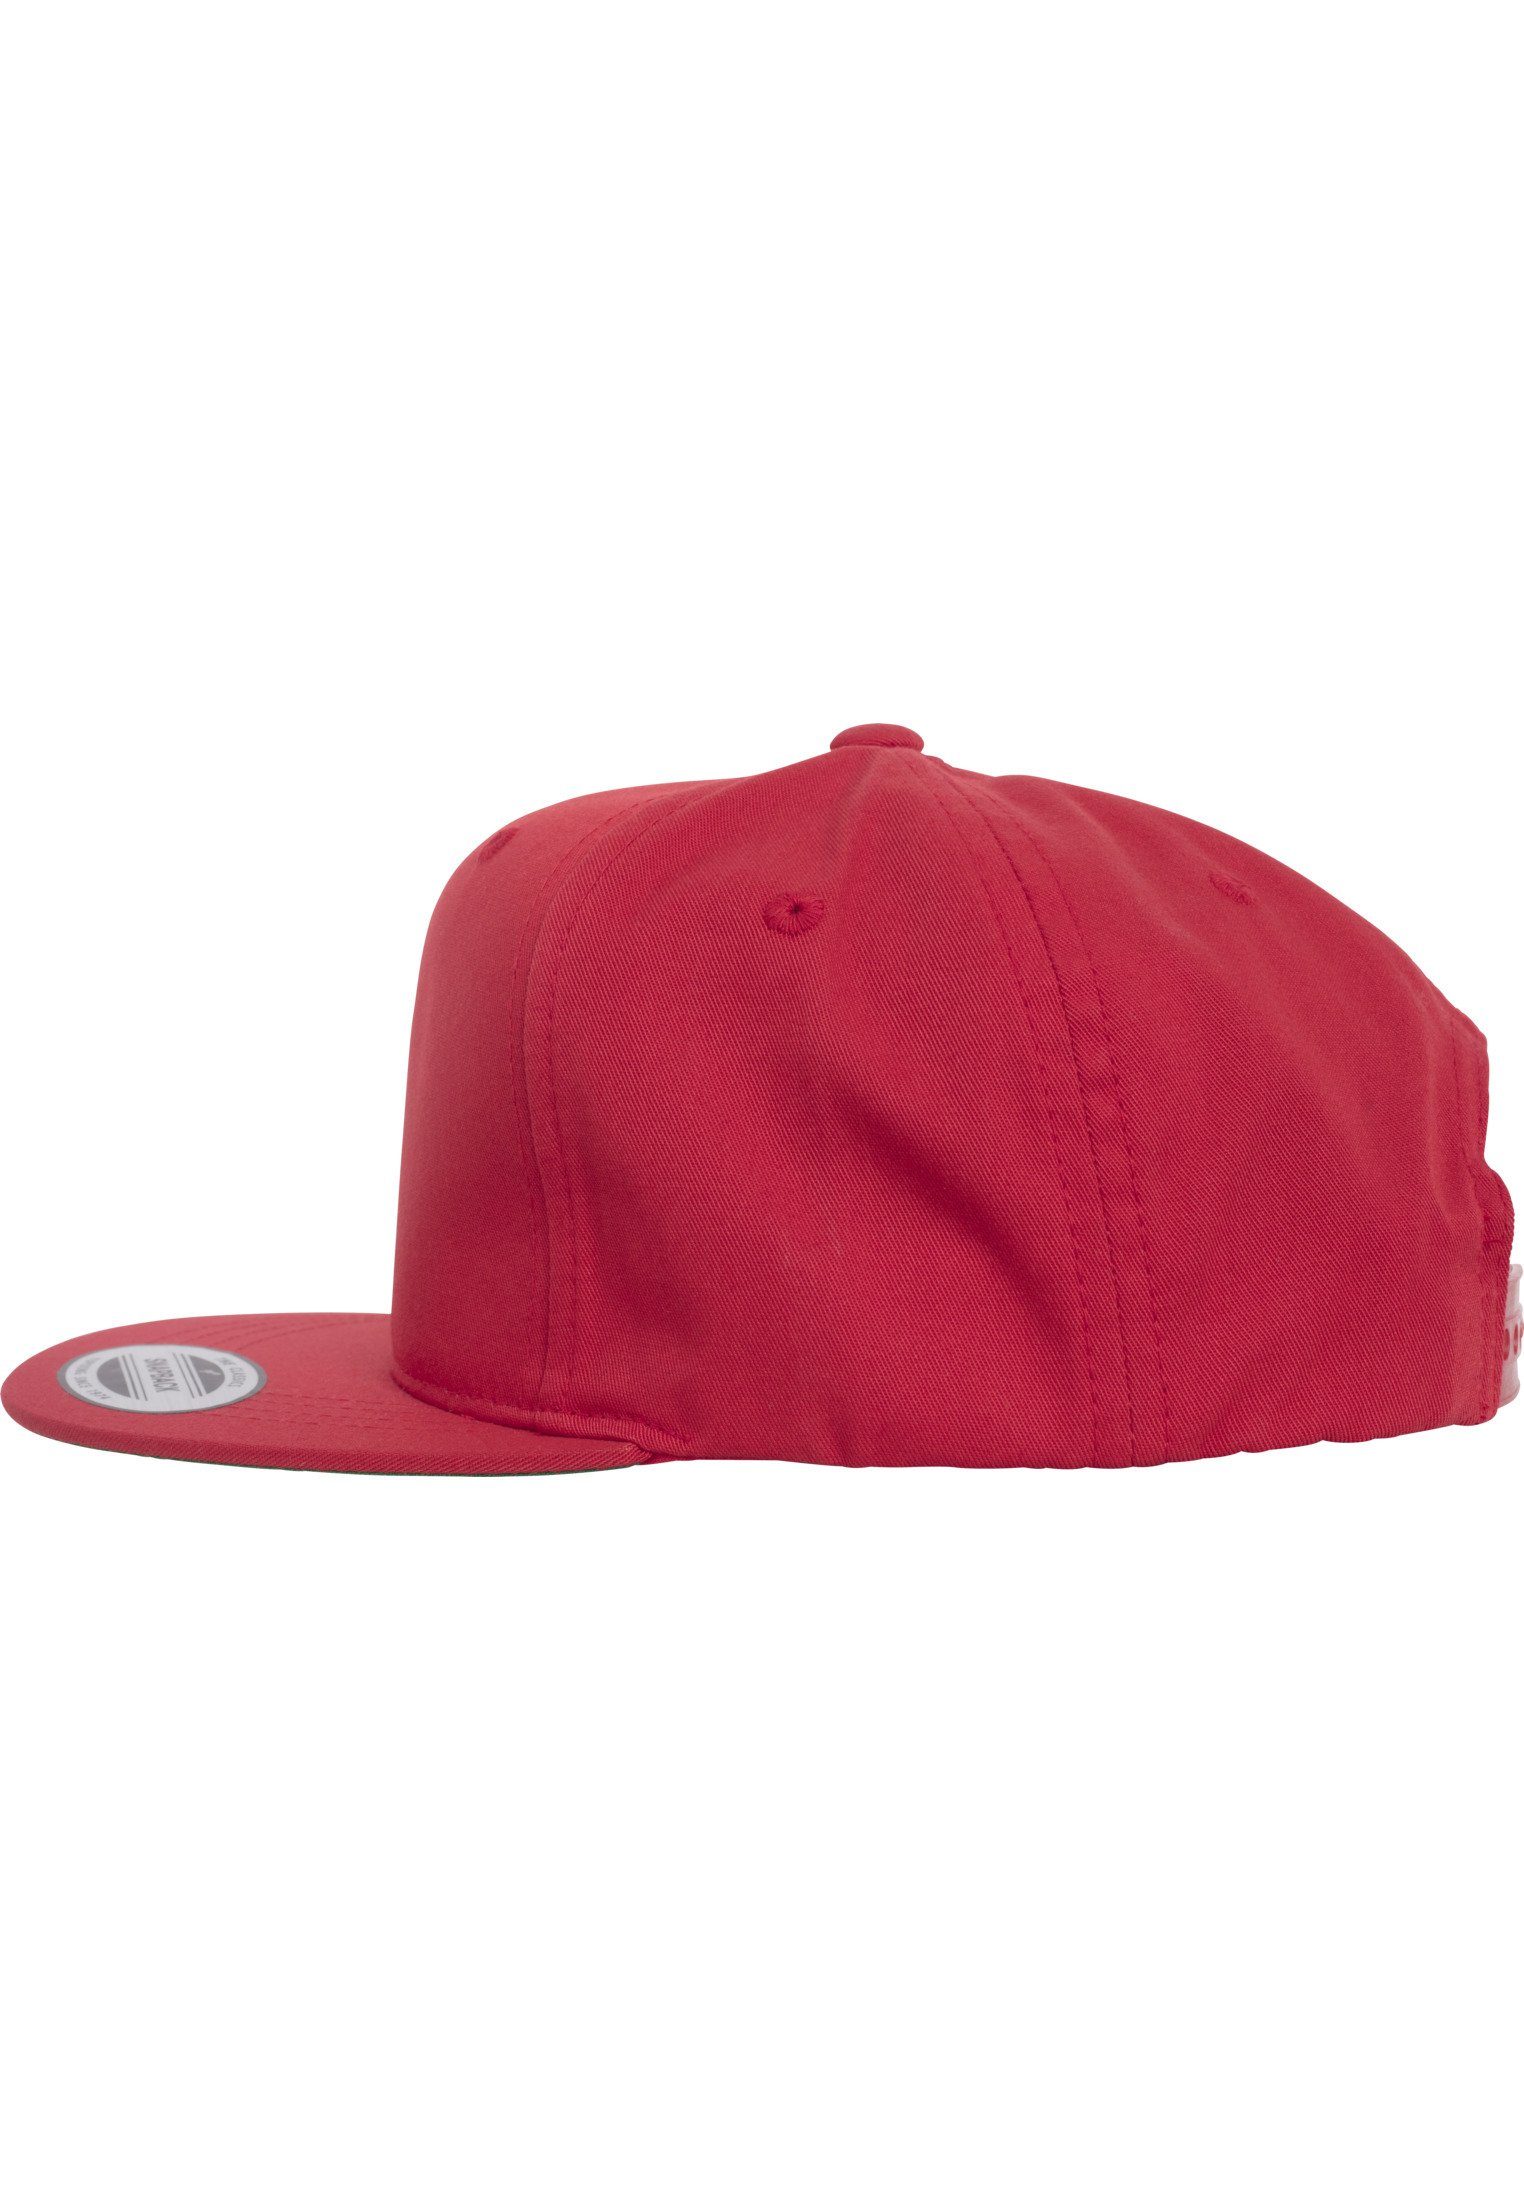 Twill red Snapback Snapback Flexfit Youth Pro-Style Cap Flex Cap